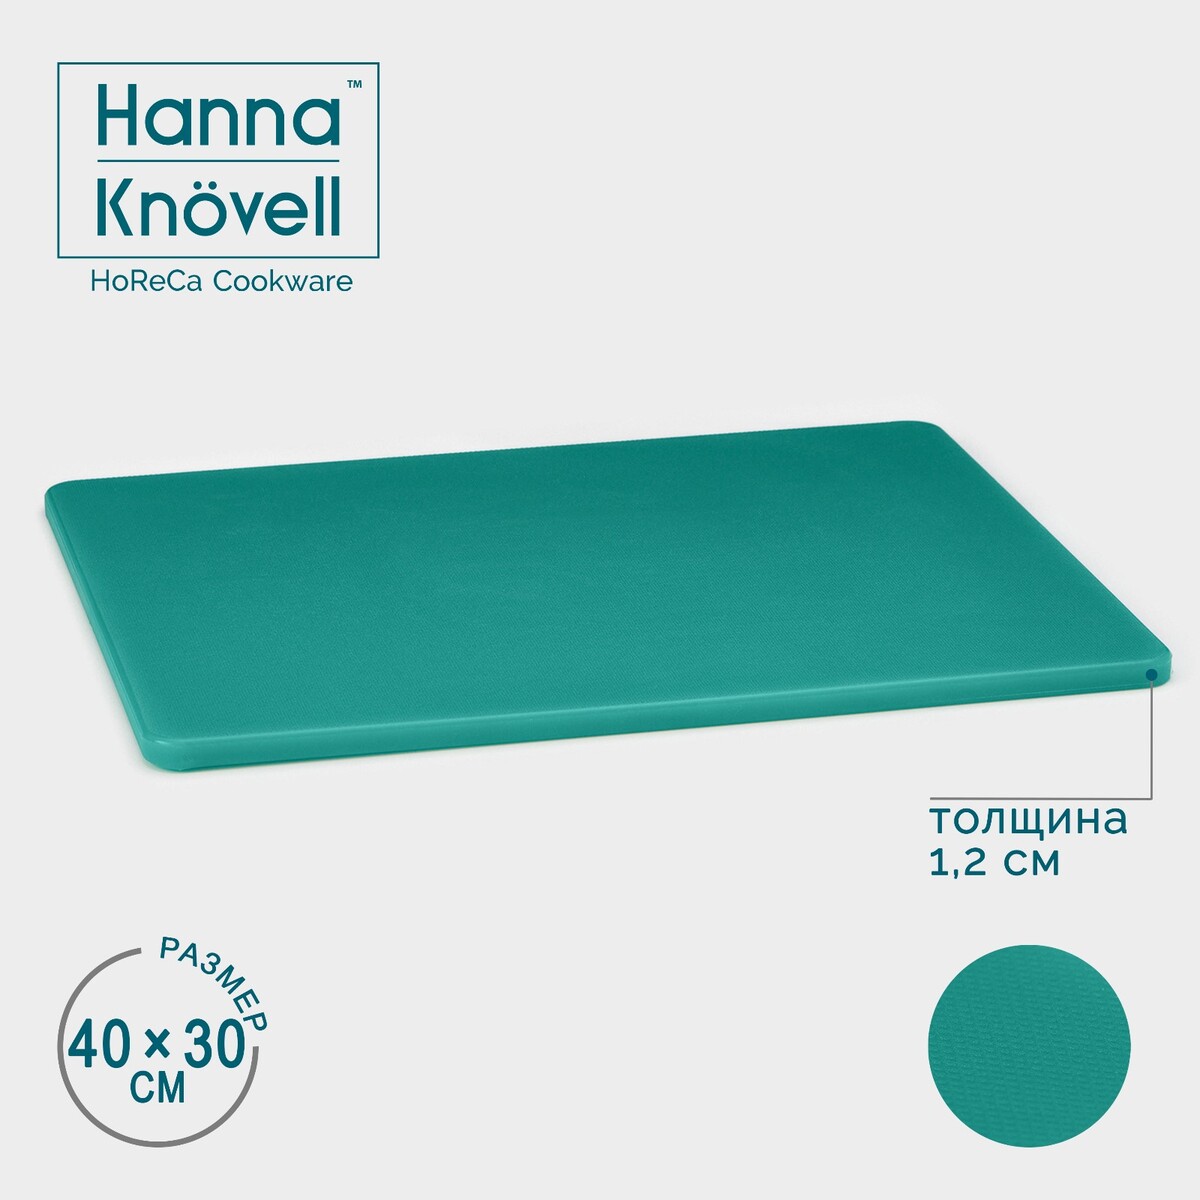 Доска профессиональная разделочная hanna knövell, 40×30×1,2 см, цвет зеленый доска разделочная пластик для рыбы 50х18х4 см зеленая y4 6477